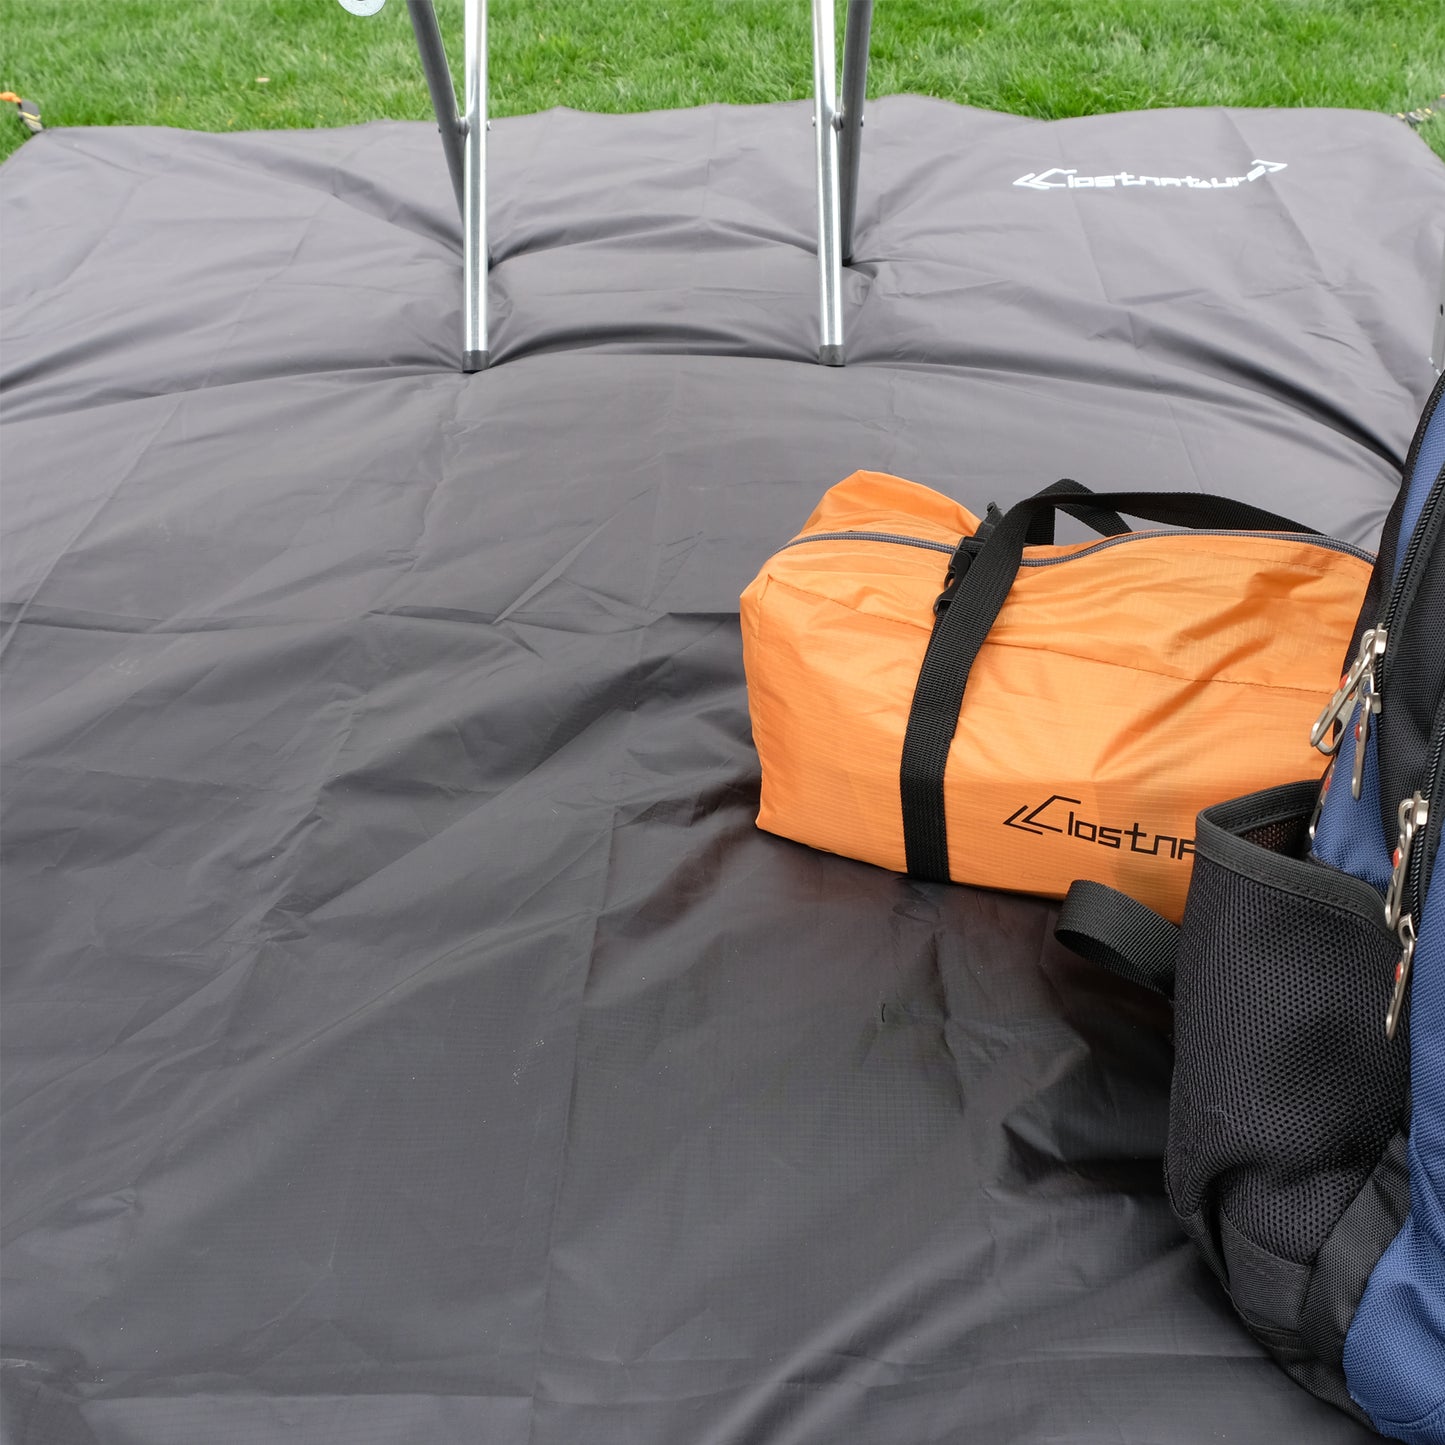 Clostnature 1-Person Tent Footprint - Waterproof Camping Tarp, Ultralight Ground Sheet Mat for Hiking, Backpacking, Hammock, Beach - Storage Bag Included